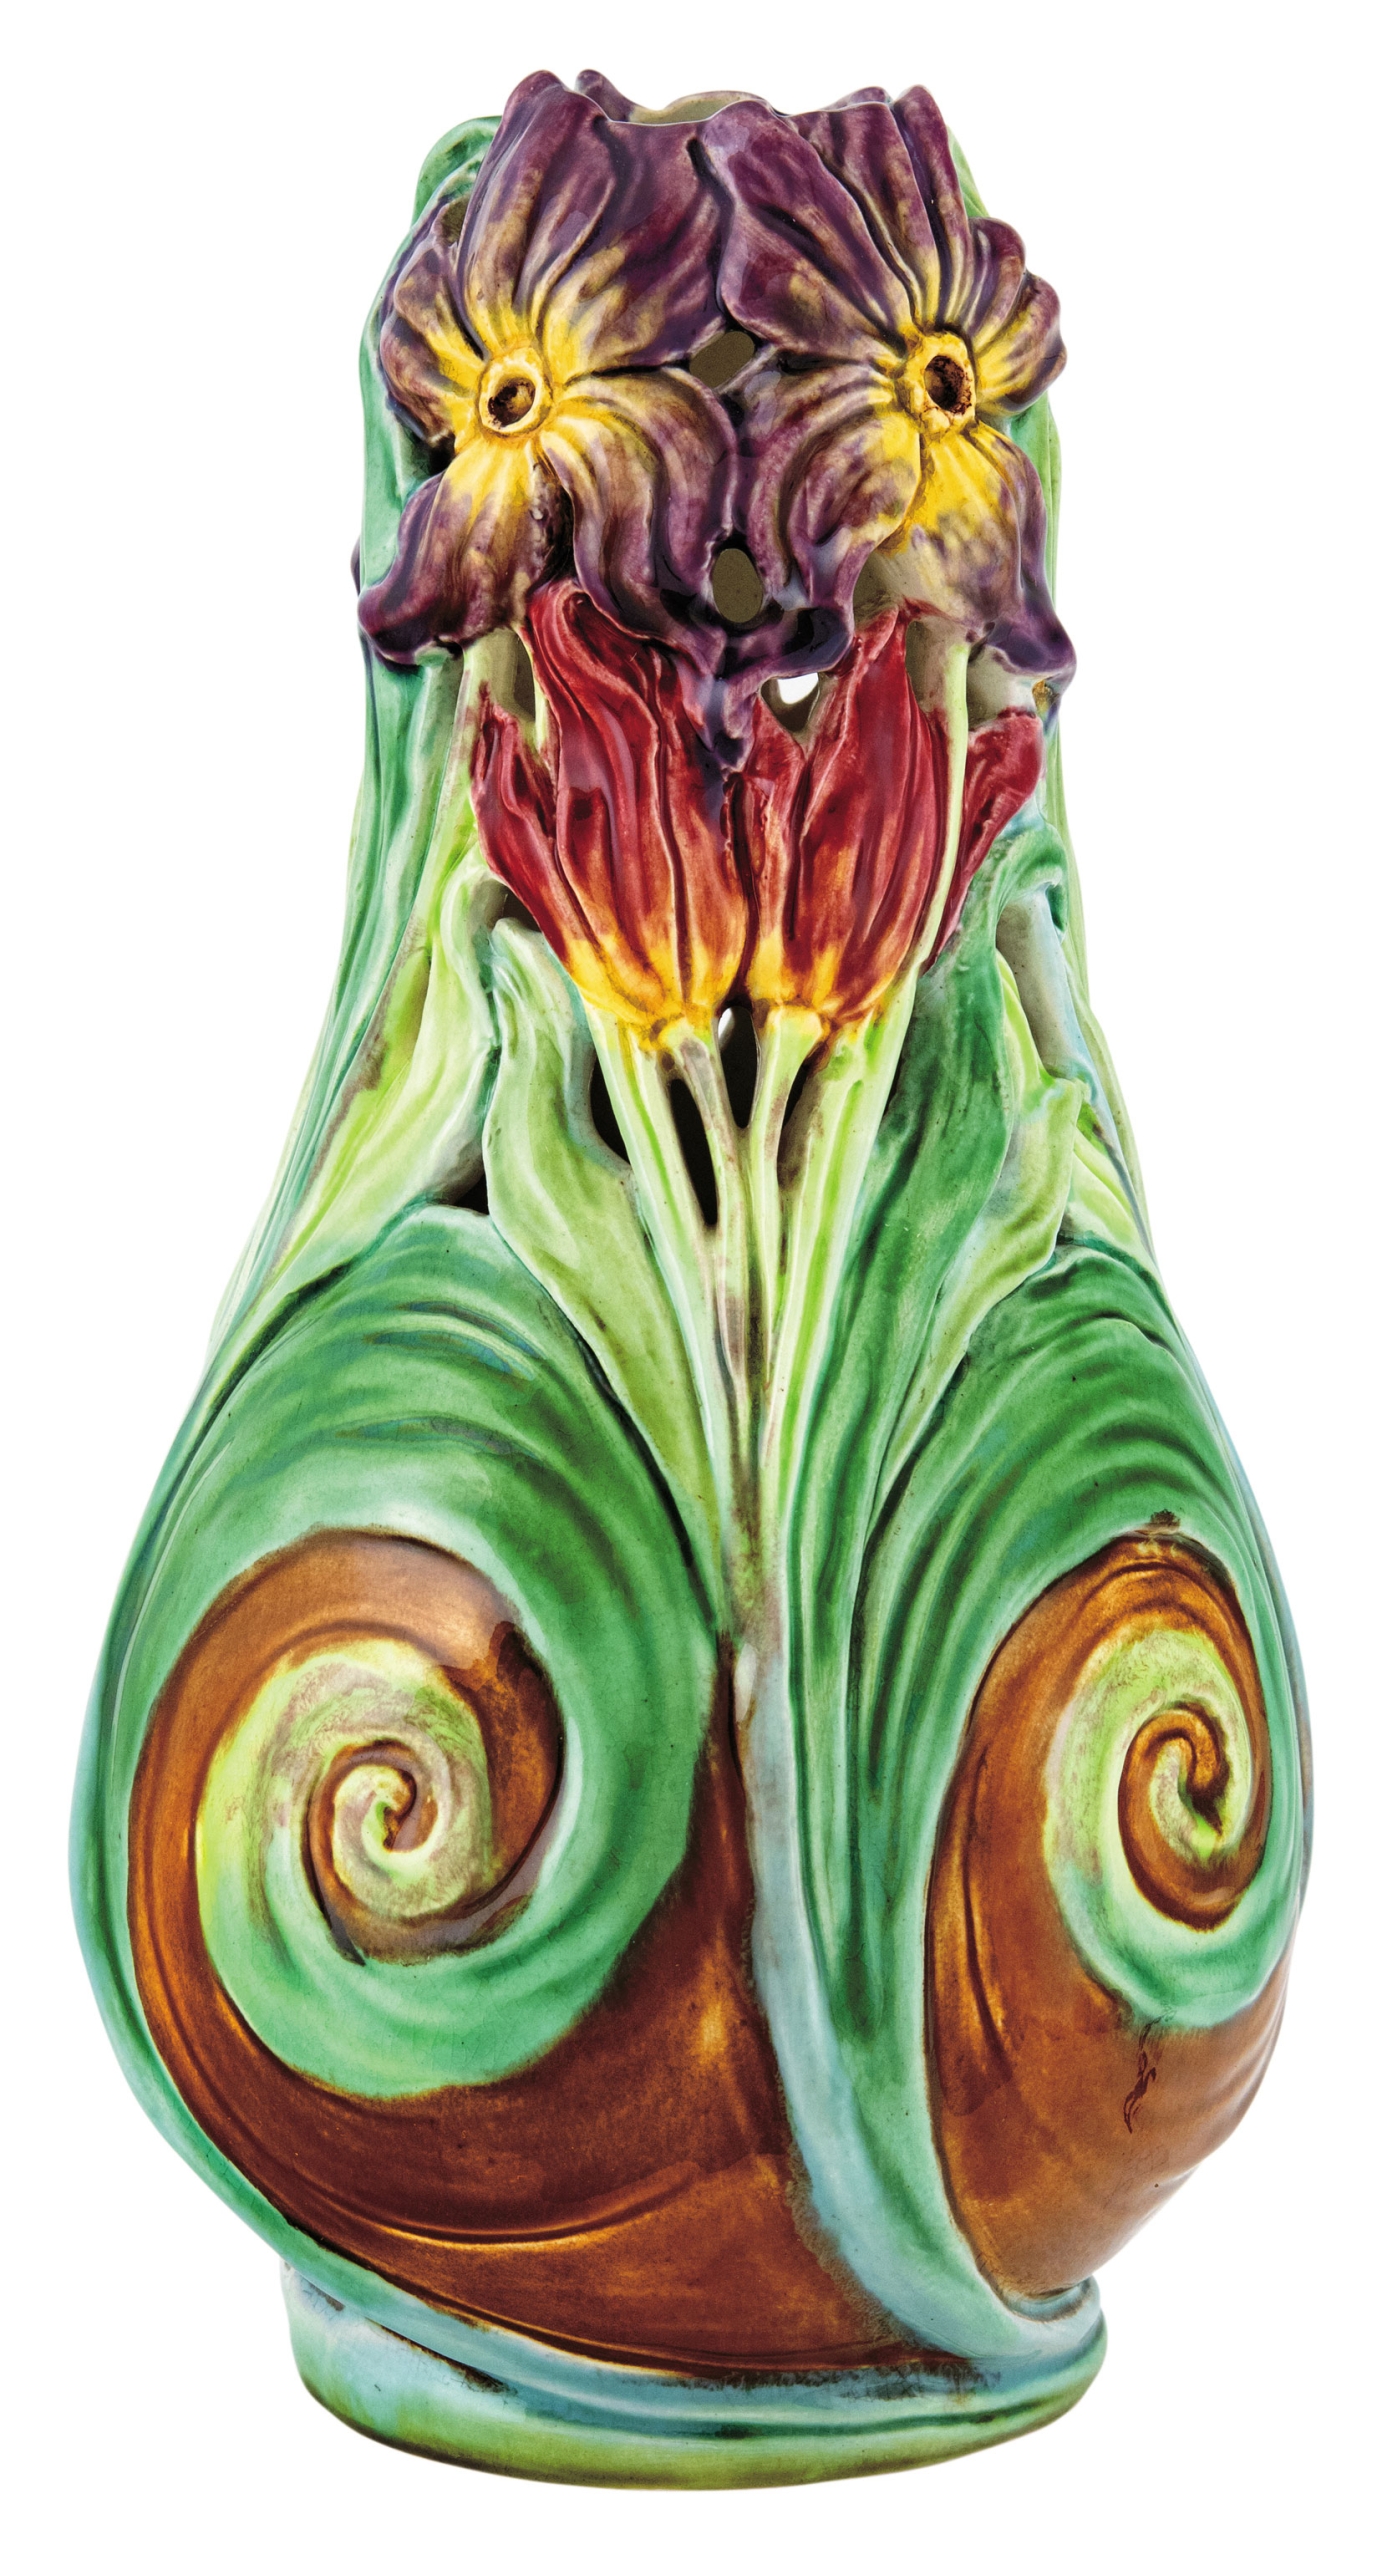 Zsolnay Vase with Flower Ornaments, around 1905